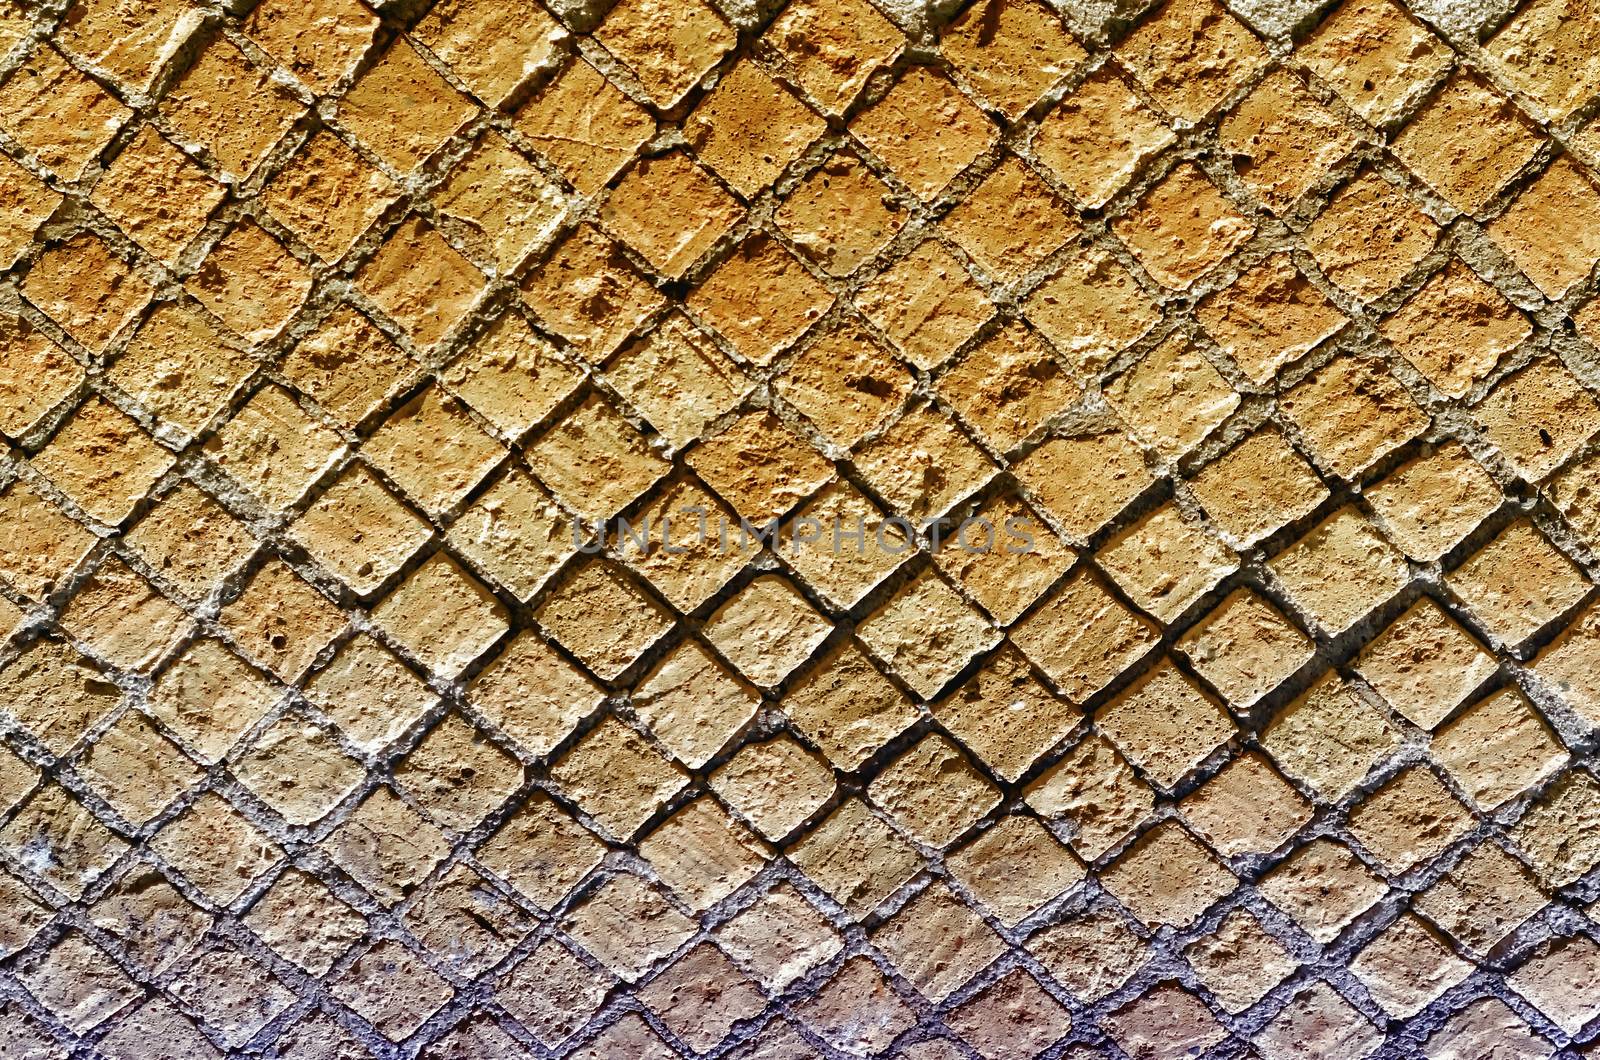 Stone Brick Wall Texture, may use as background by marcorubino